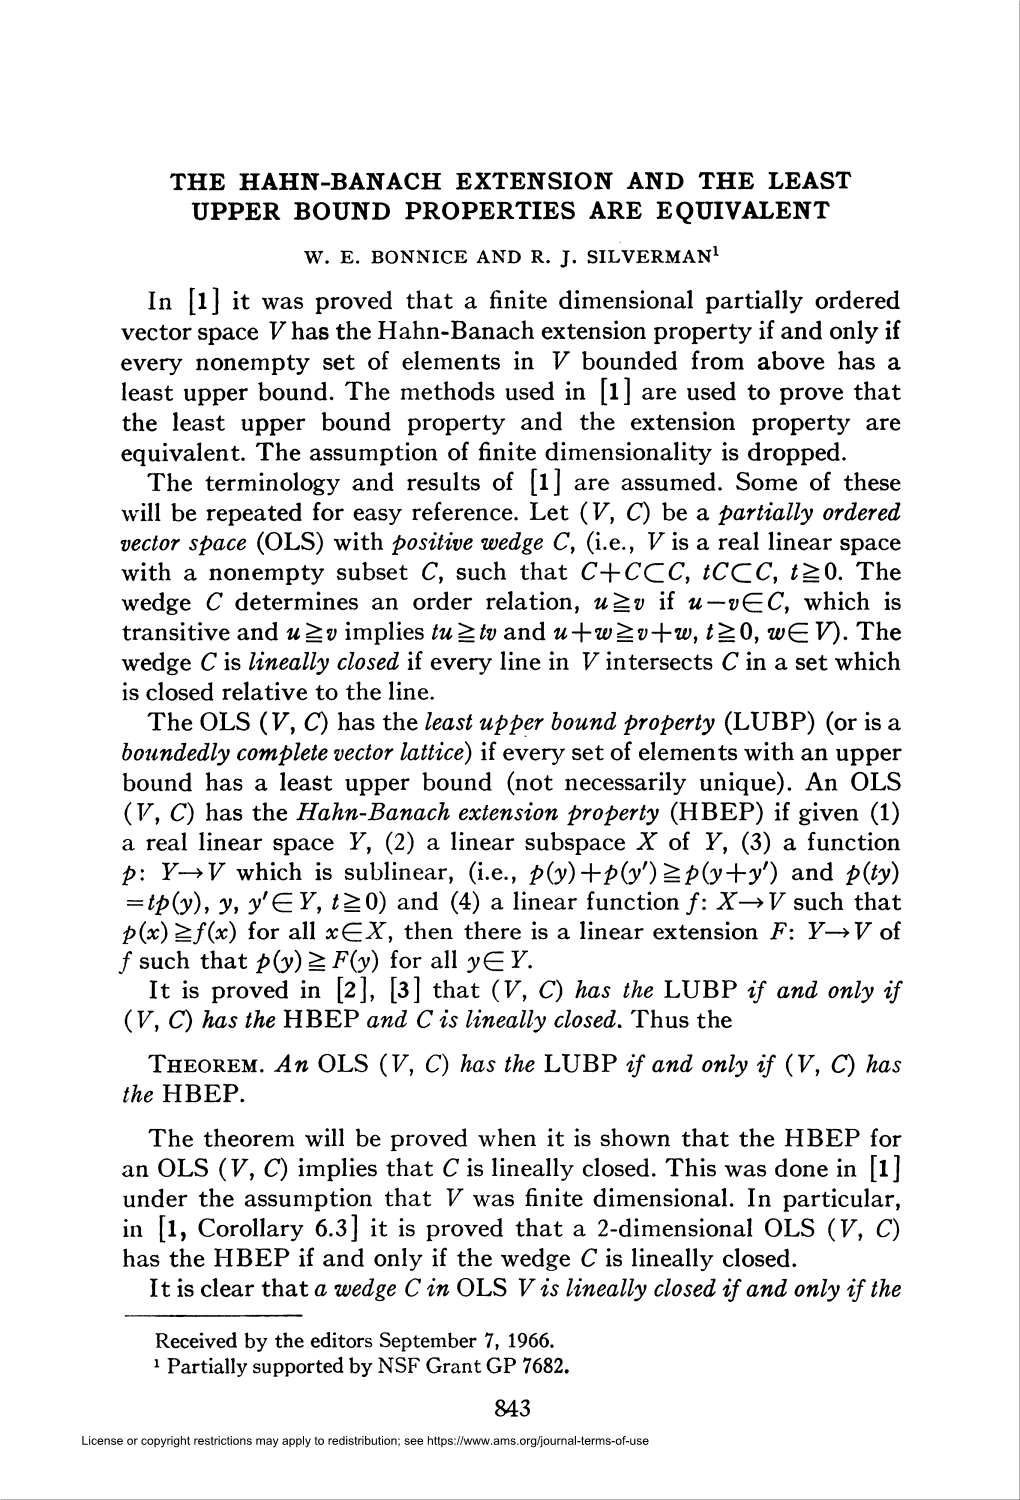 UPPER BOUND PROPERTIES ARE EQUIVALENT Theorem. an OLS (V, C) Has the LUBP If and Only If (V, C) Has the HBEP